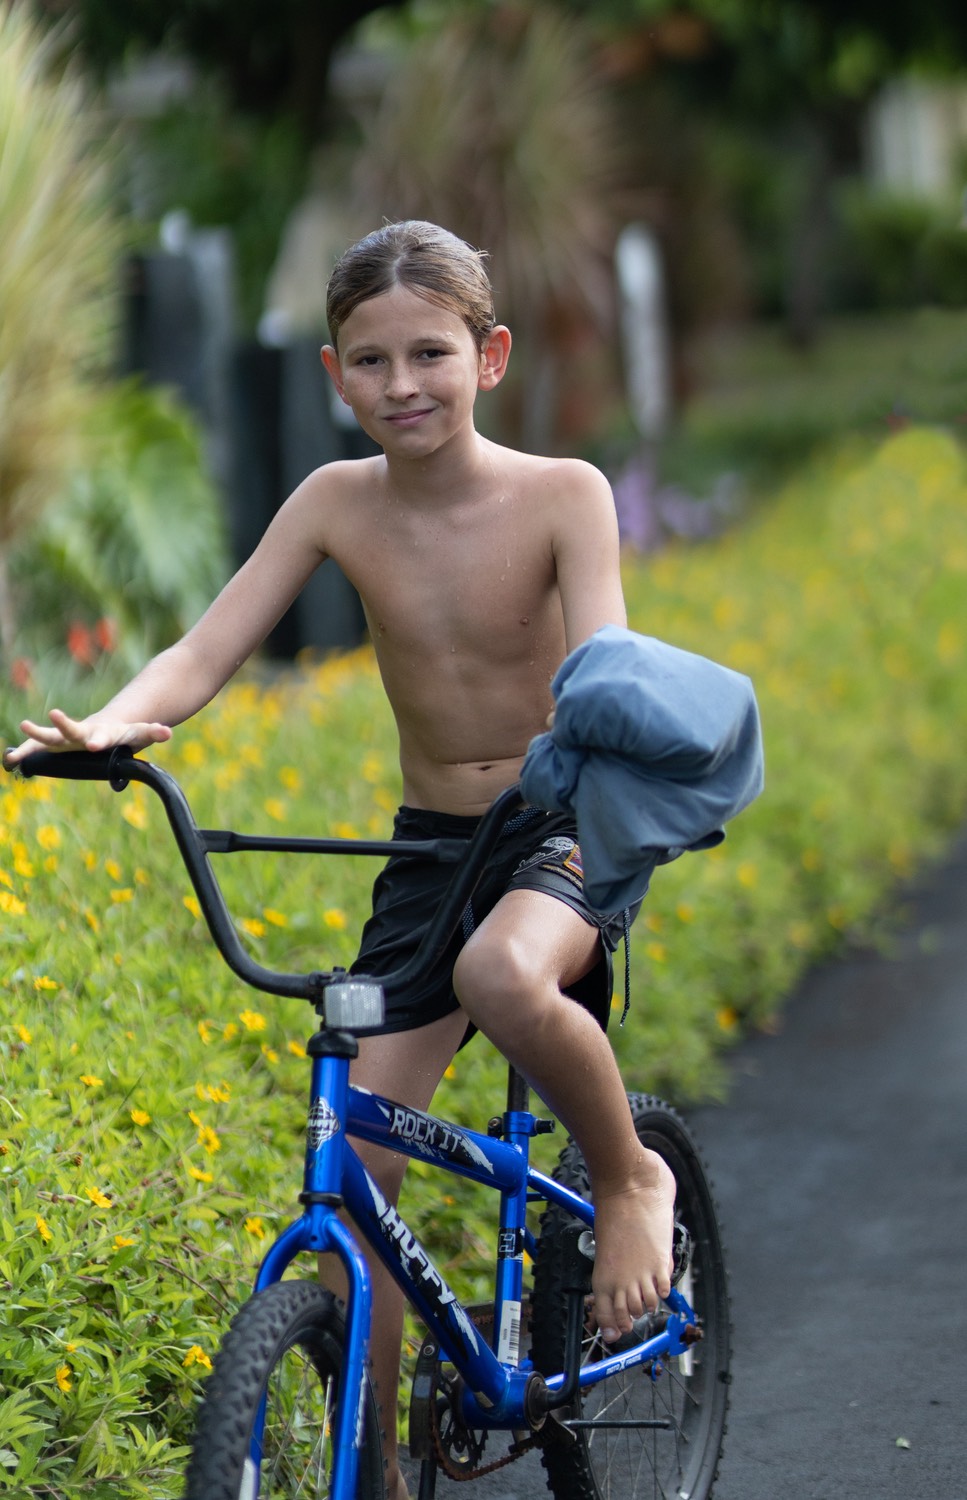 For bike riding in Kauai